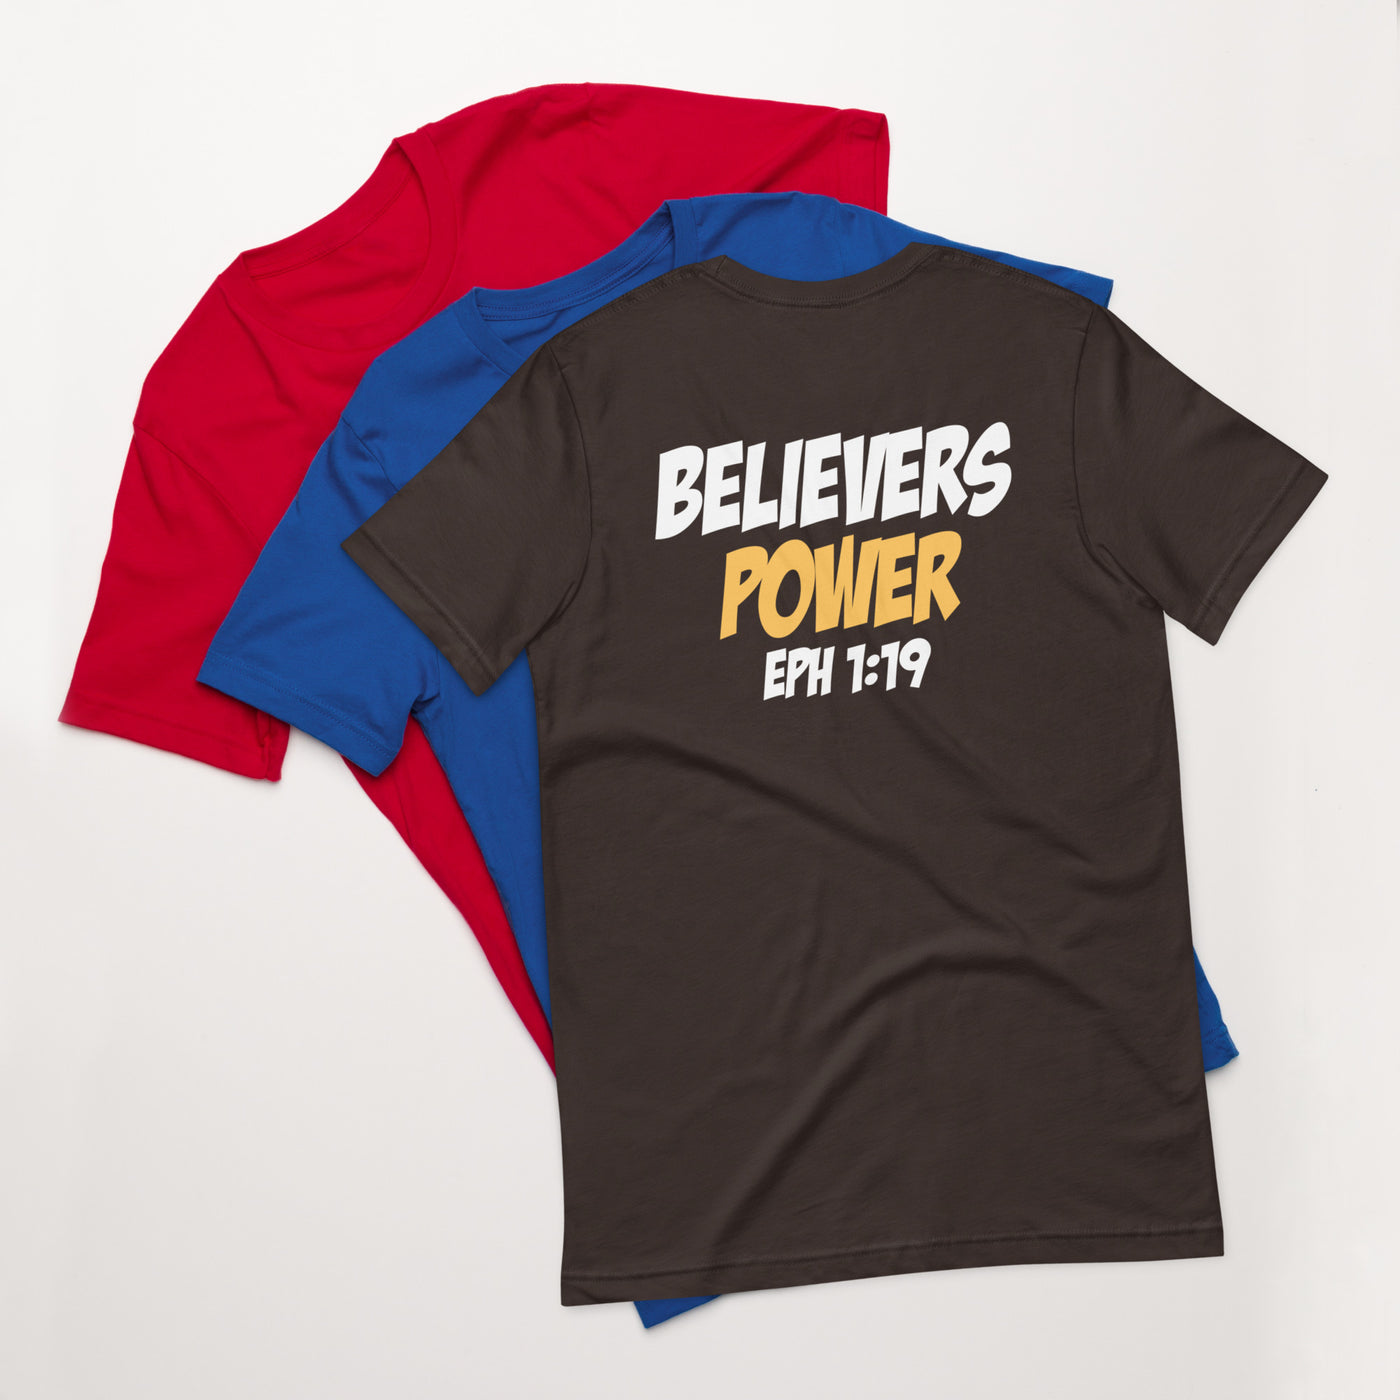 F&H Christian Believers Power Eph 1:19 Unisex t-shirt